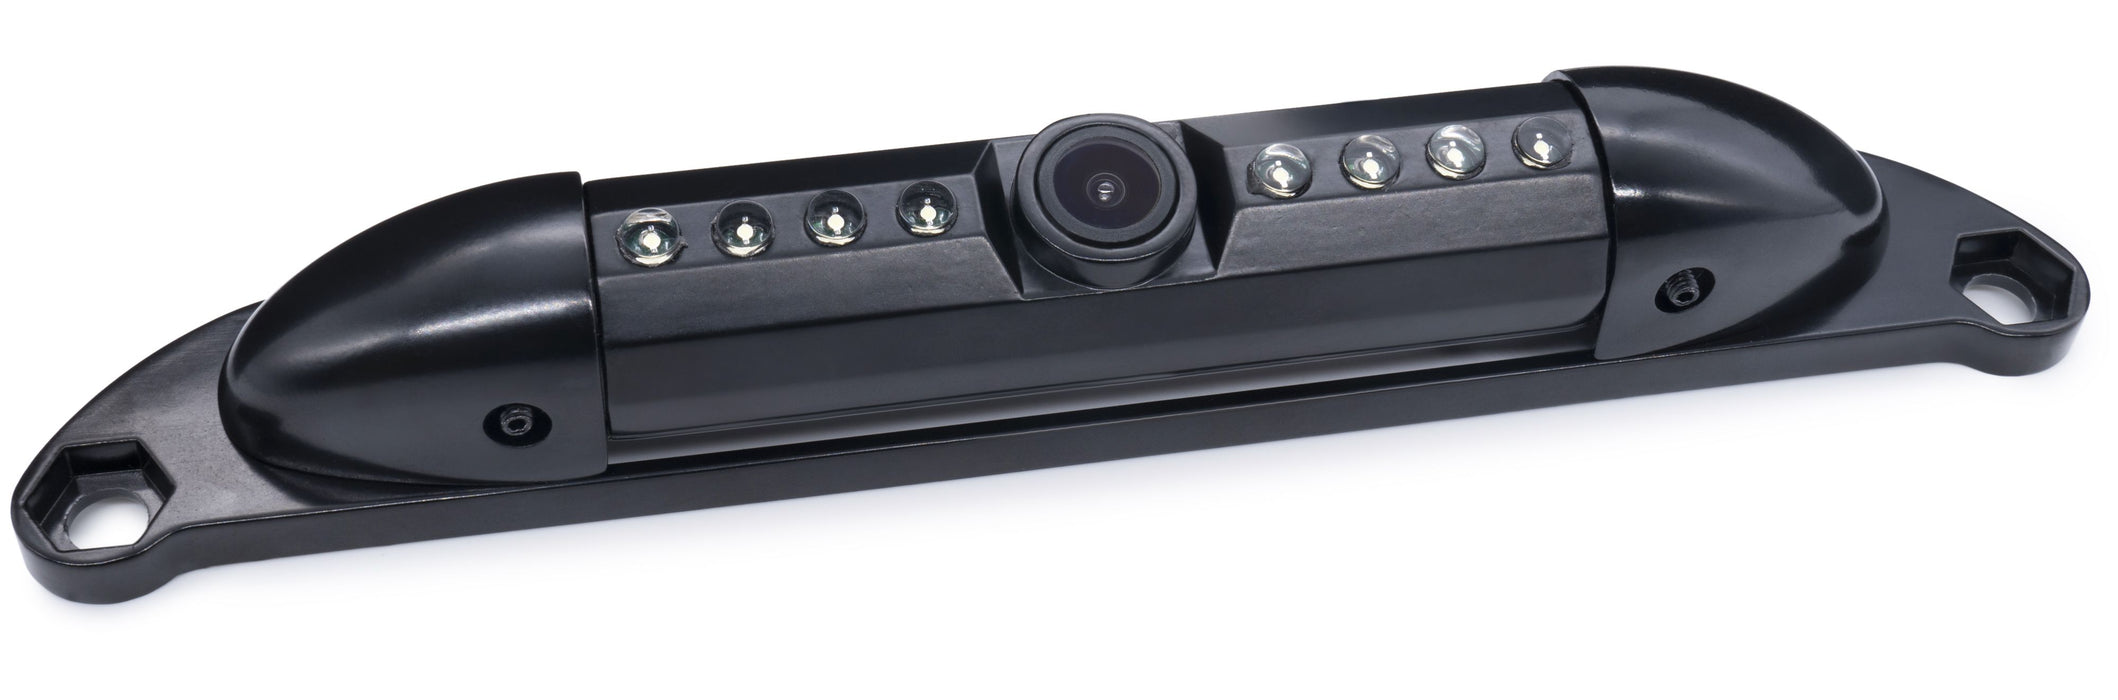 BARCAM221 Universal Waterproof License Plate Mount Backup Camera with Full metal body